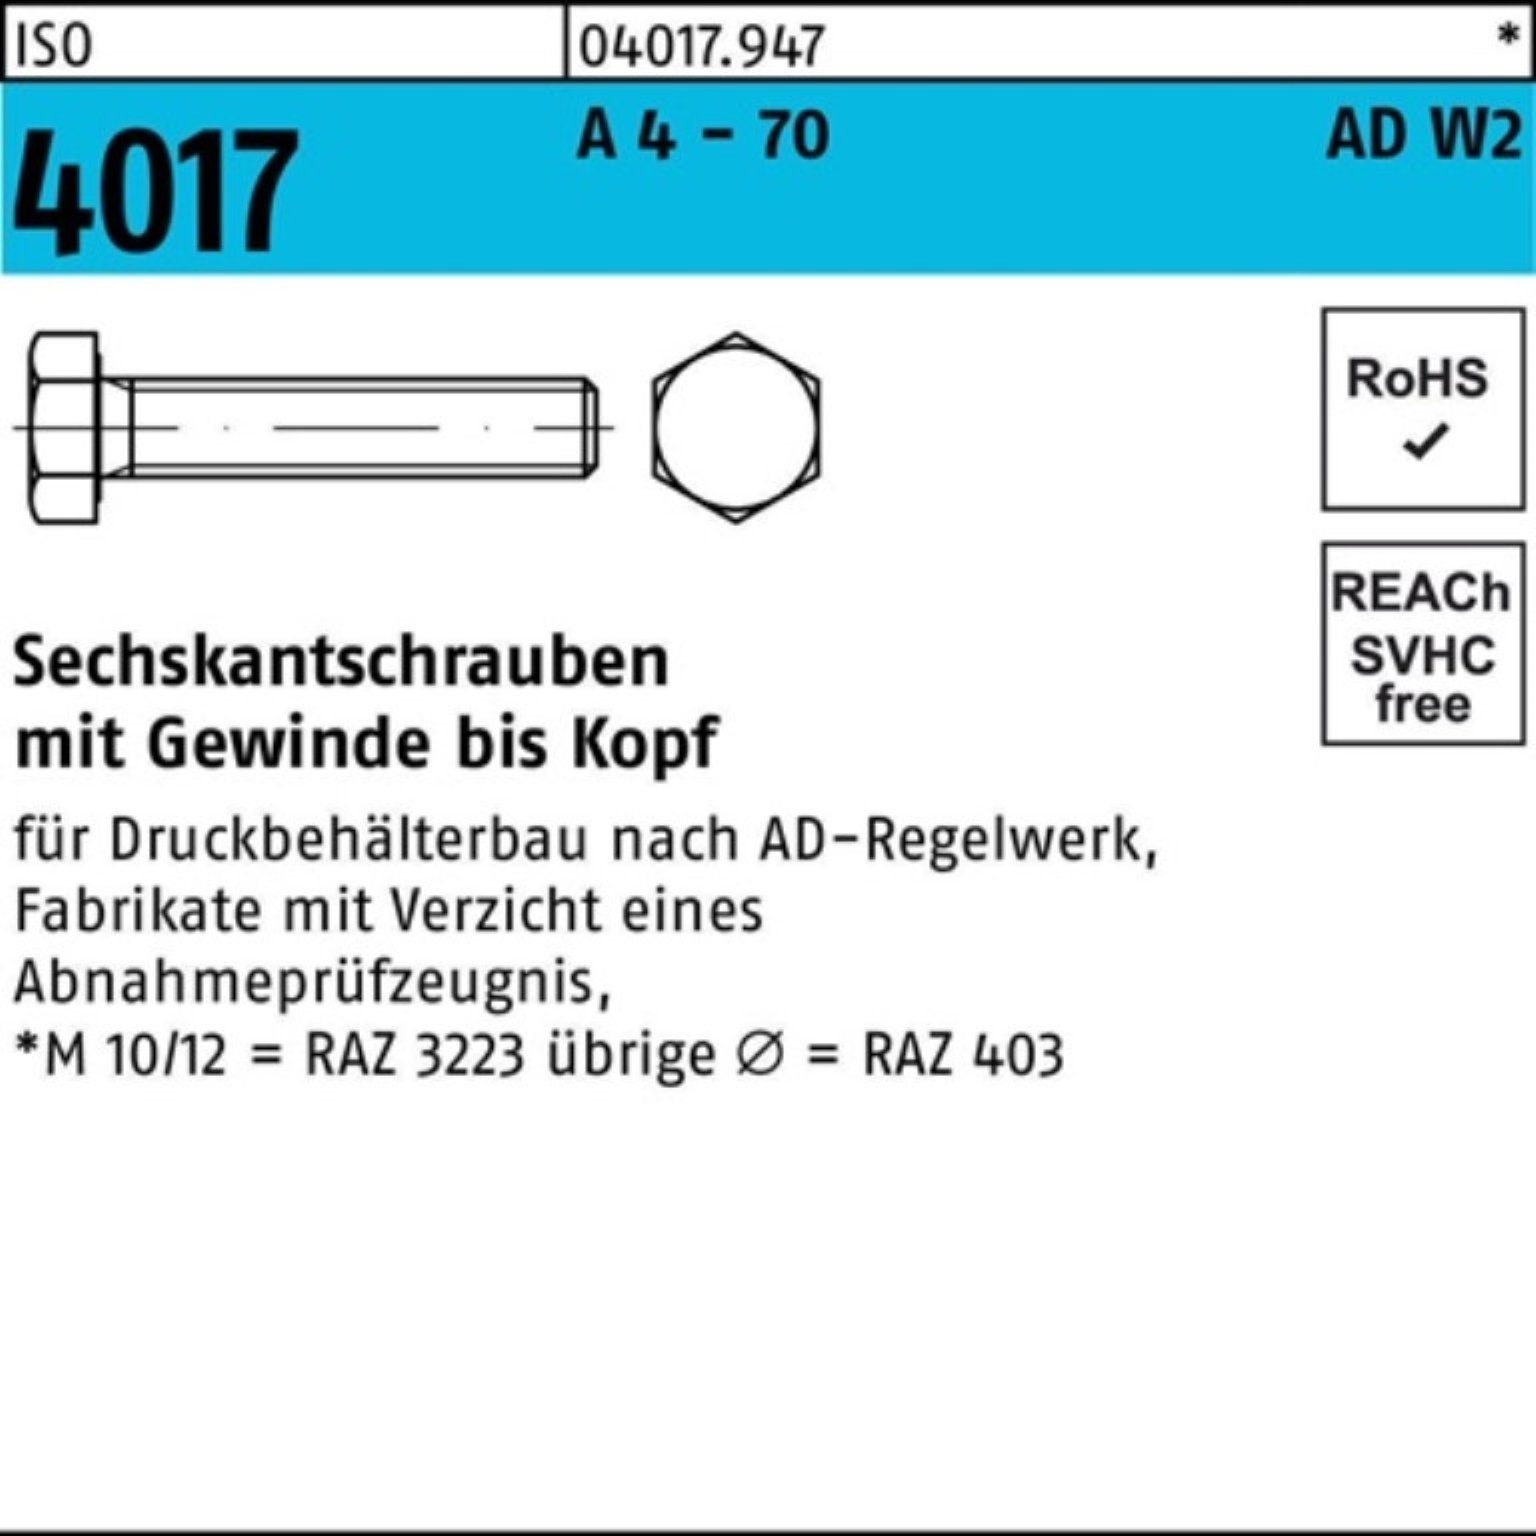 Bufab Sechskantschraube 200er Pack Sechskantschraube ISO 4017 VG M8x 20 A 4 - 70 AD-W2 200 St